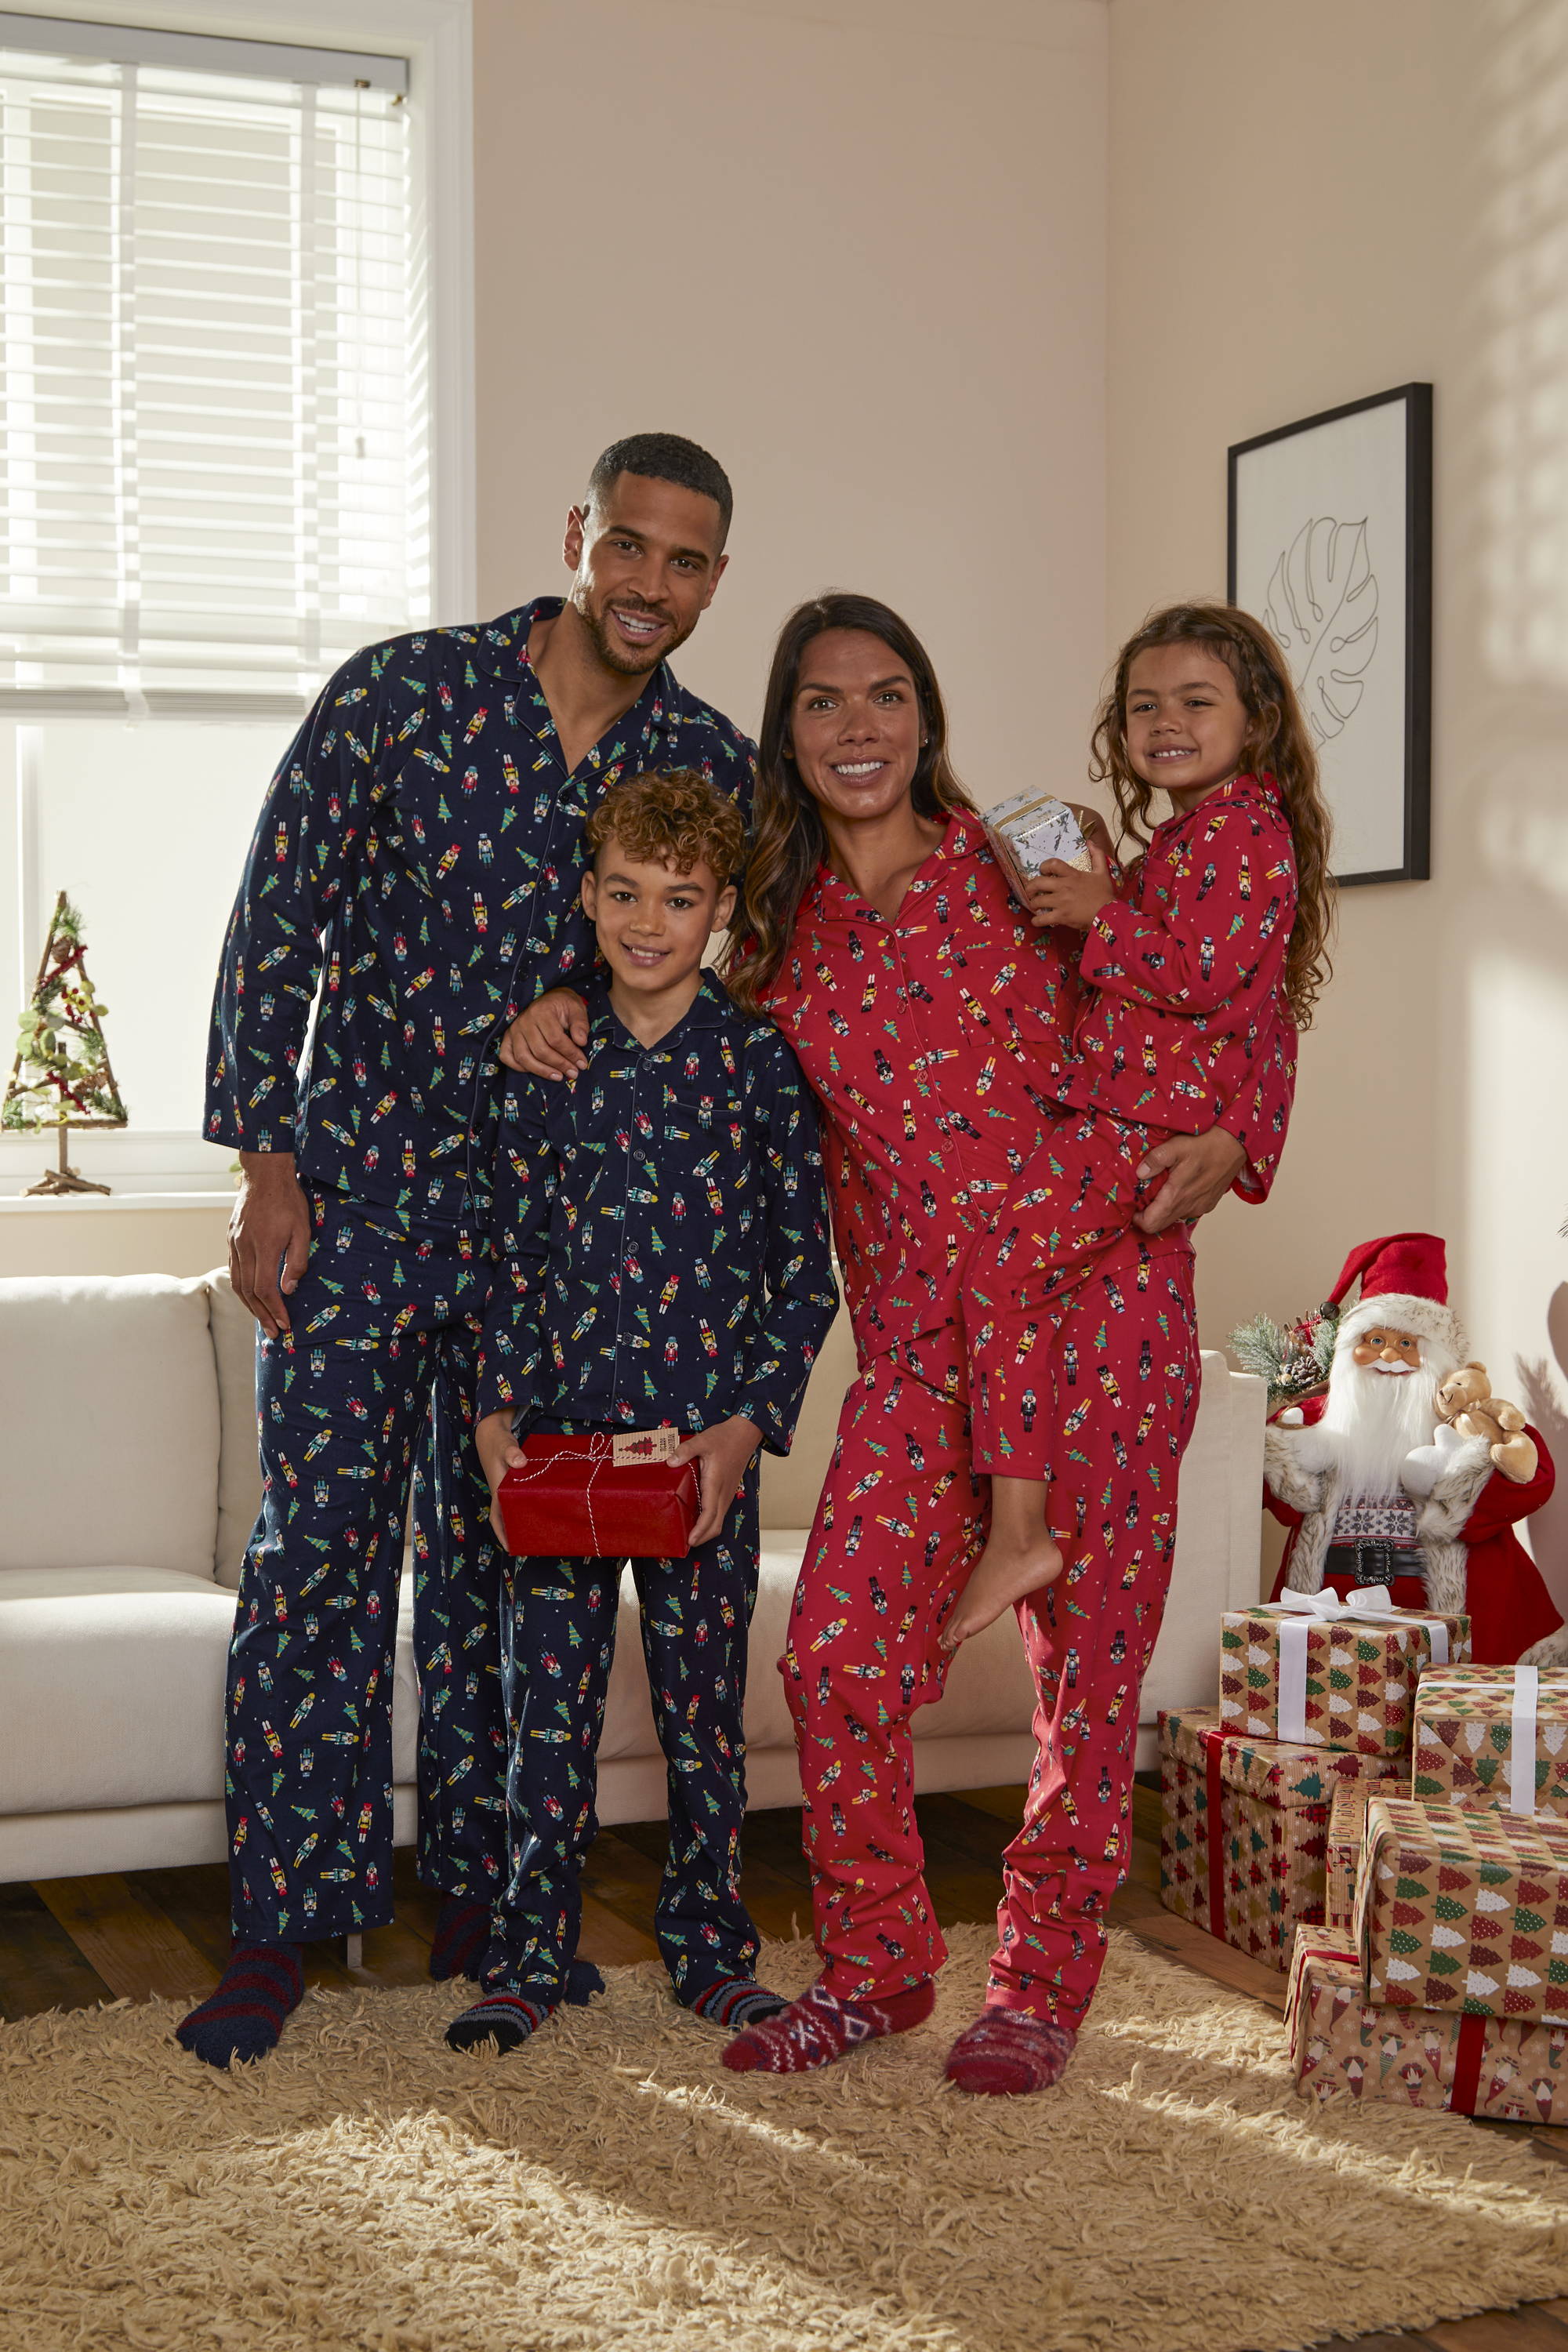 Matching festive family PJs